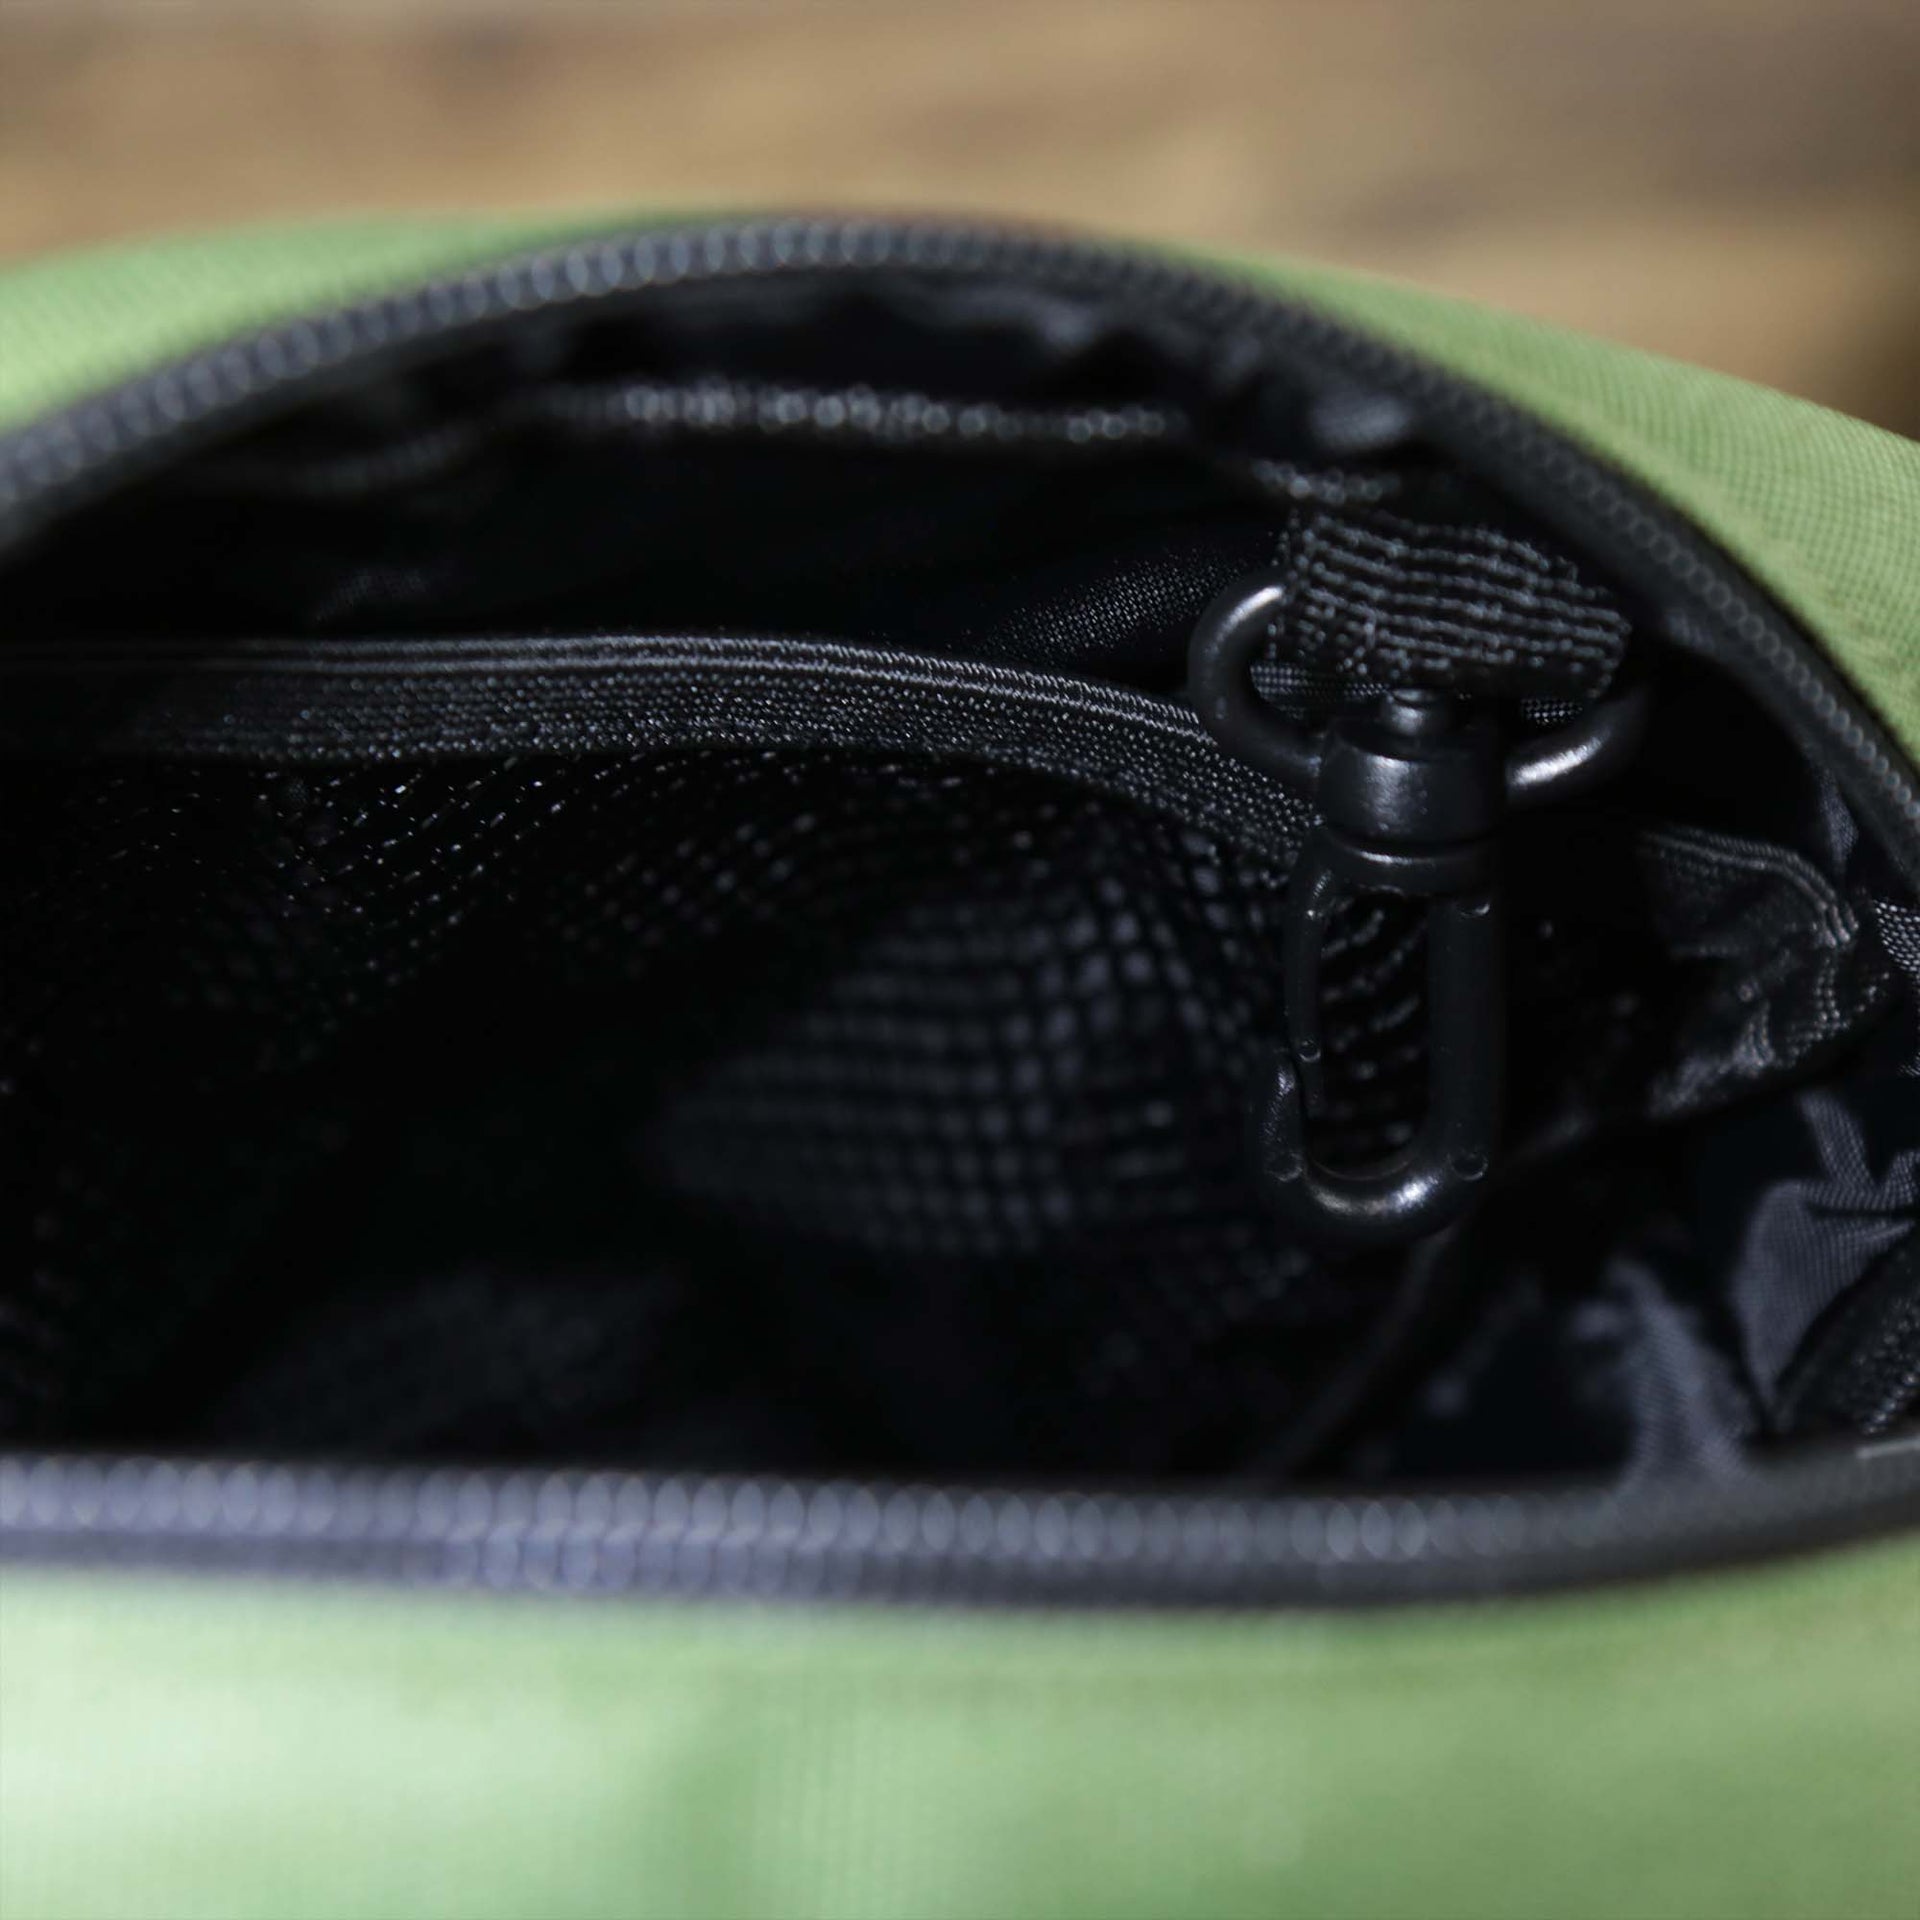 The main pocket on the Essential Nylon Shoulder Bag Streetwear with Mesh Pocket | Official Olive